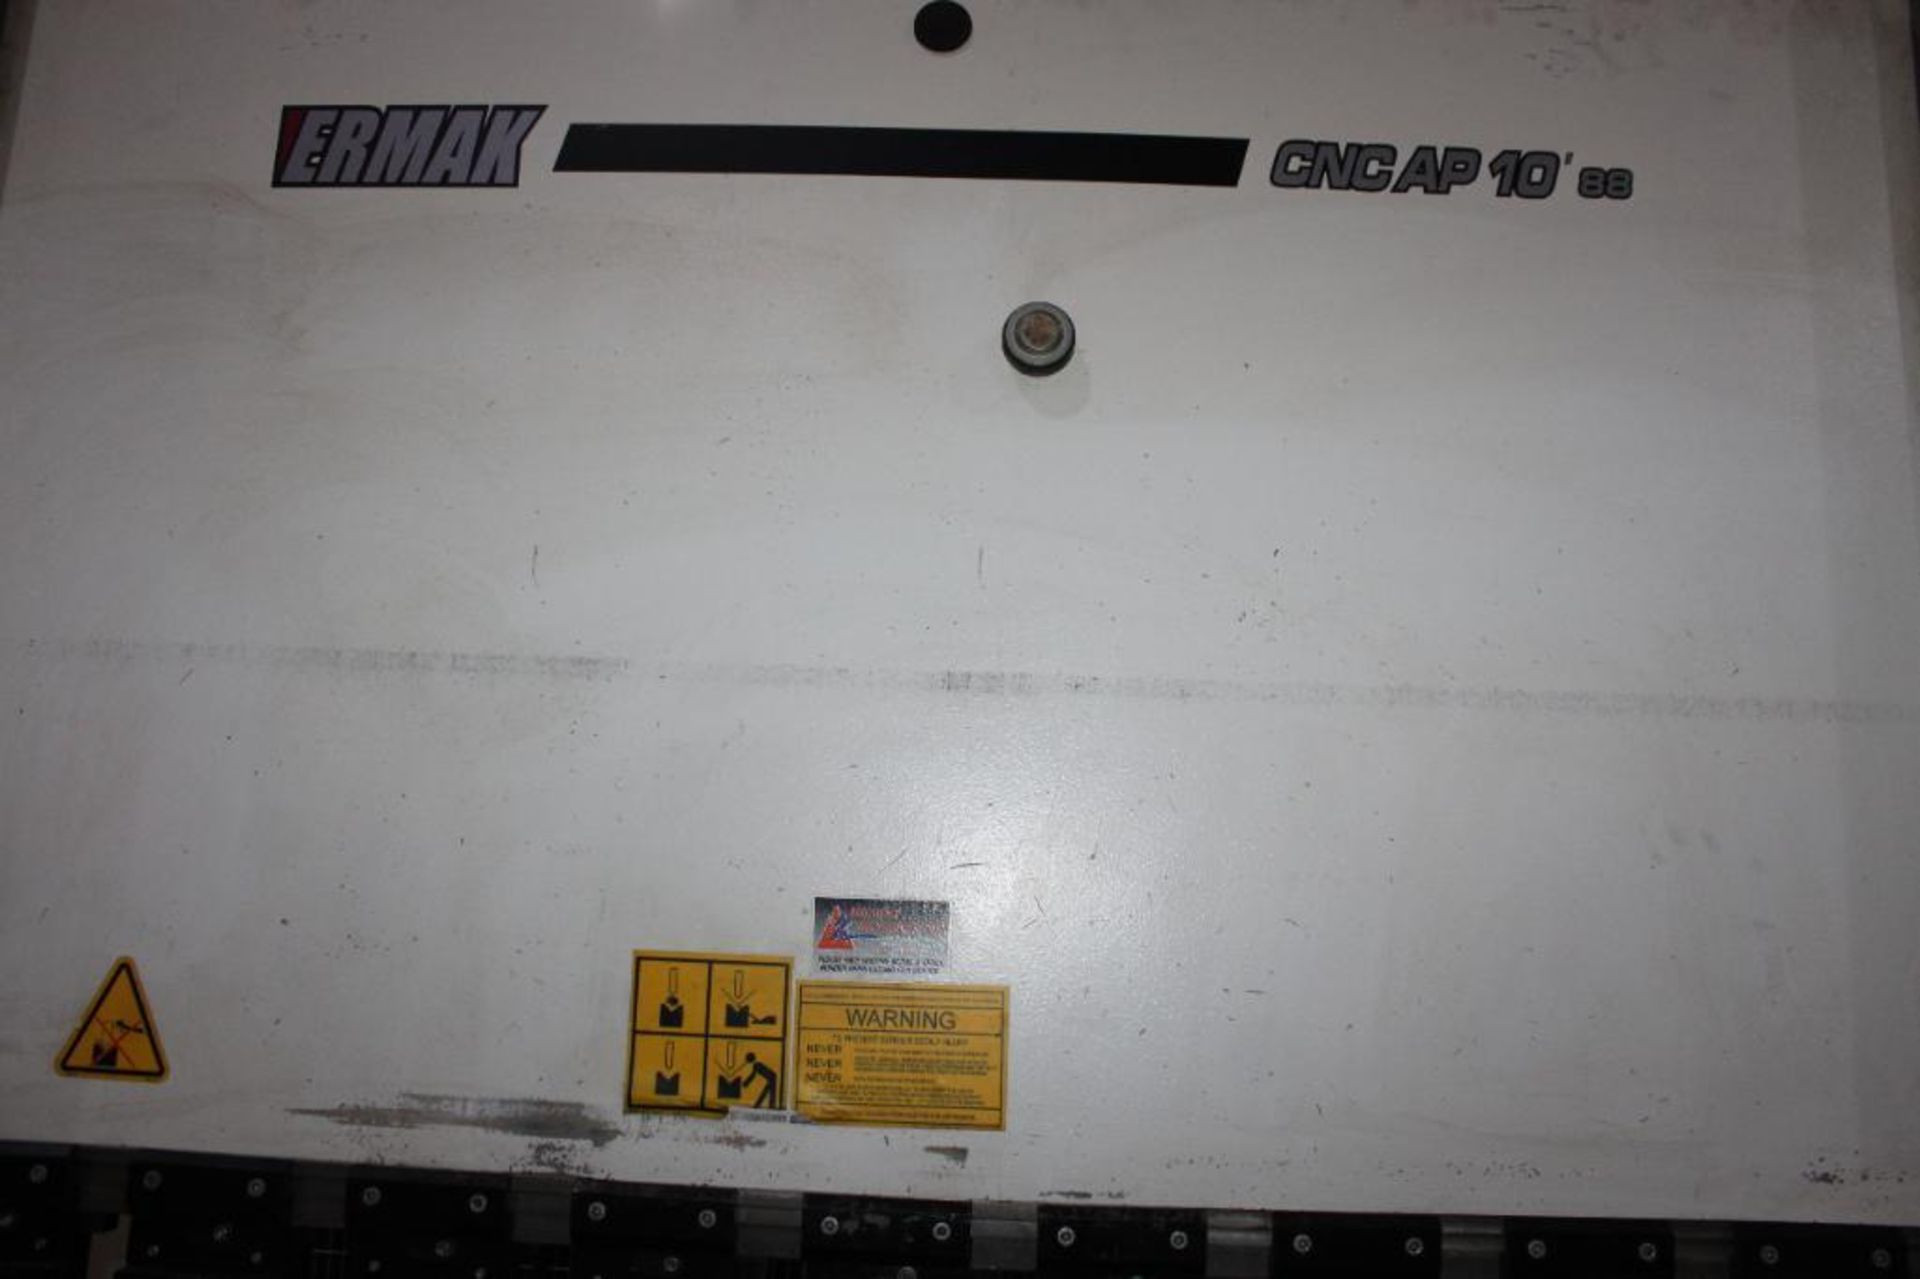 Ermak CNC Press Brake Machine AP 10' 88 W/ DelemDA-GGW Type CNAAP10X88 Model 2006 - Image 3 of 16